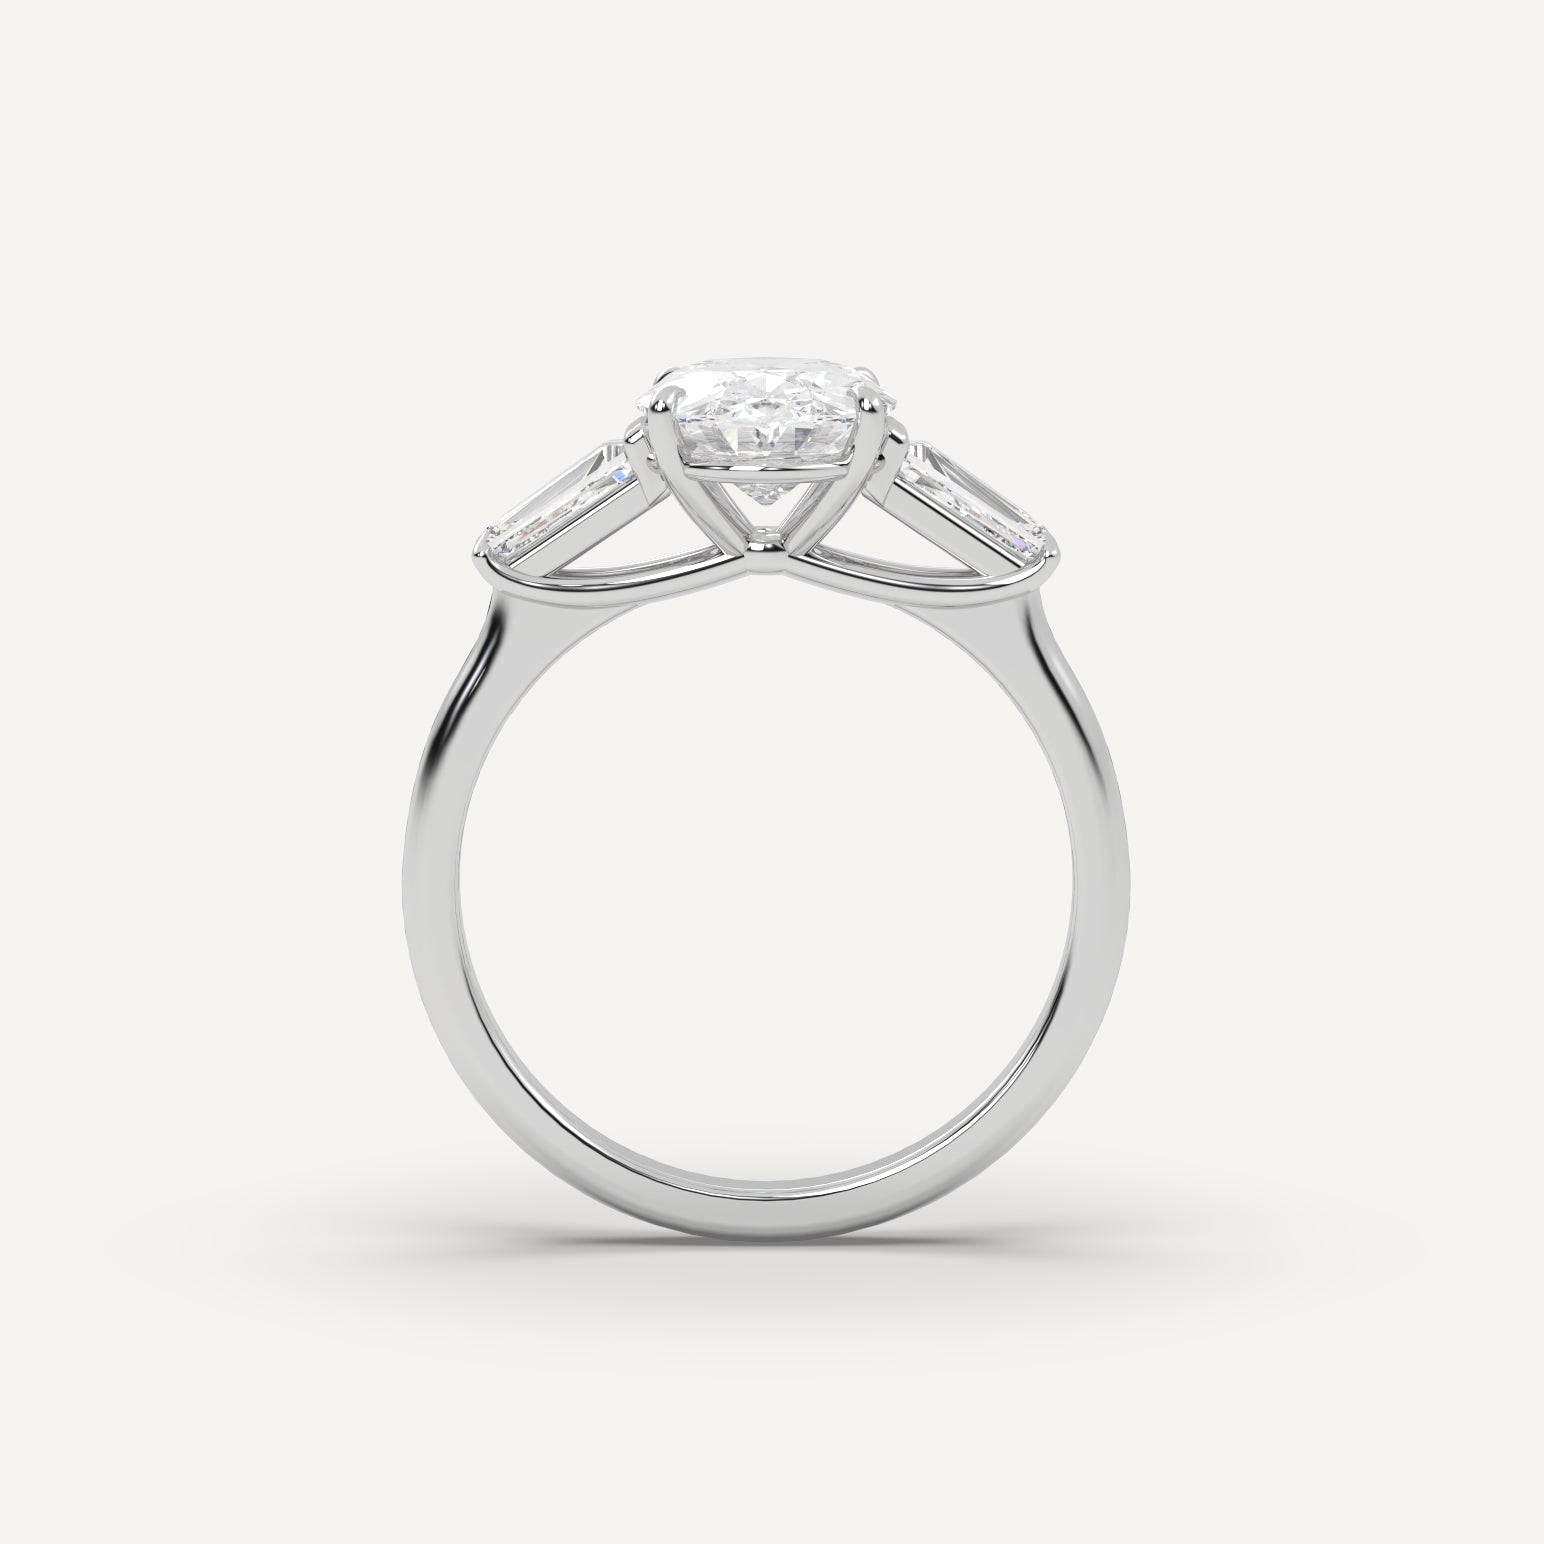 Oval Cut Diamond Engagement Ring - 3 carat